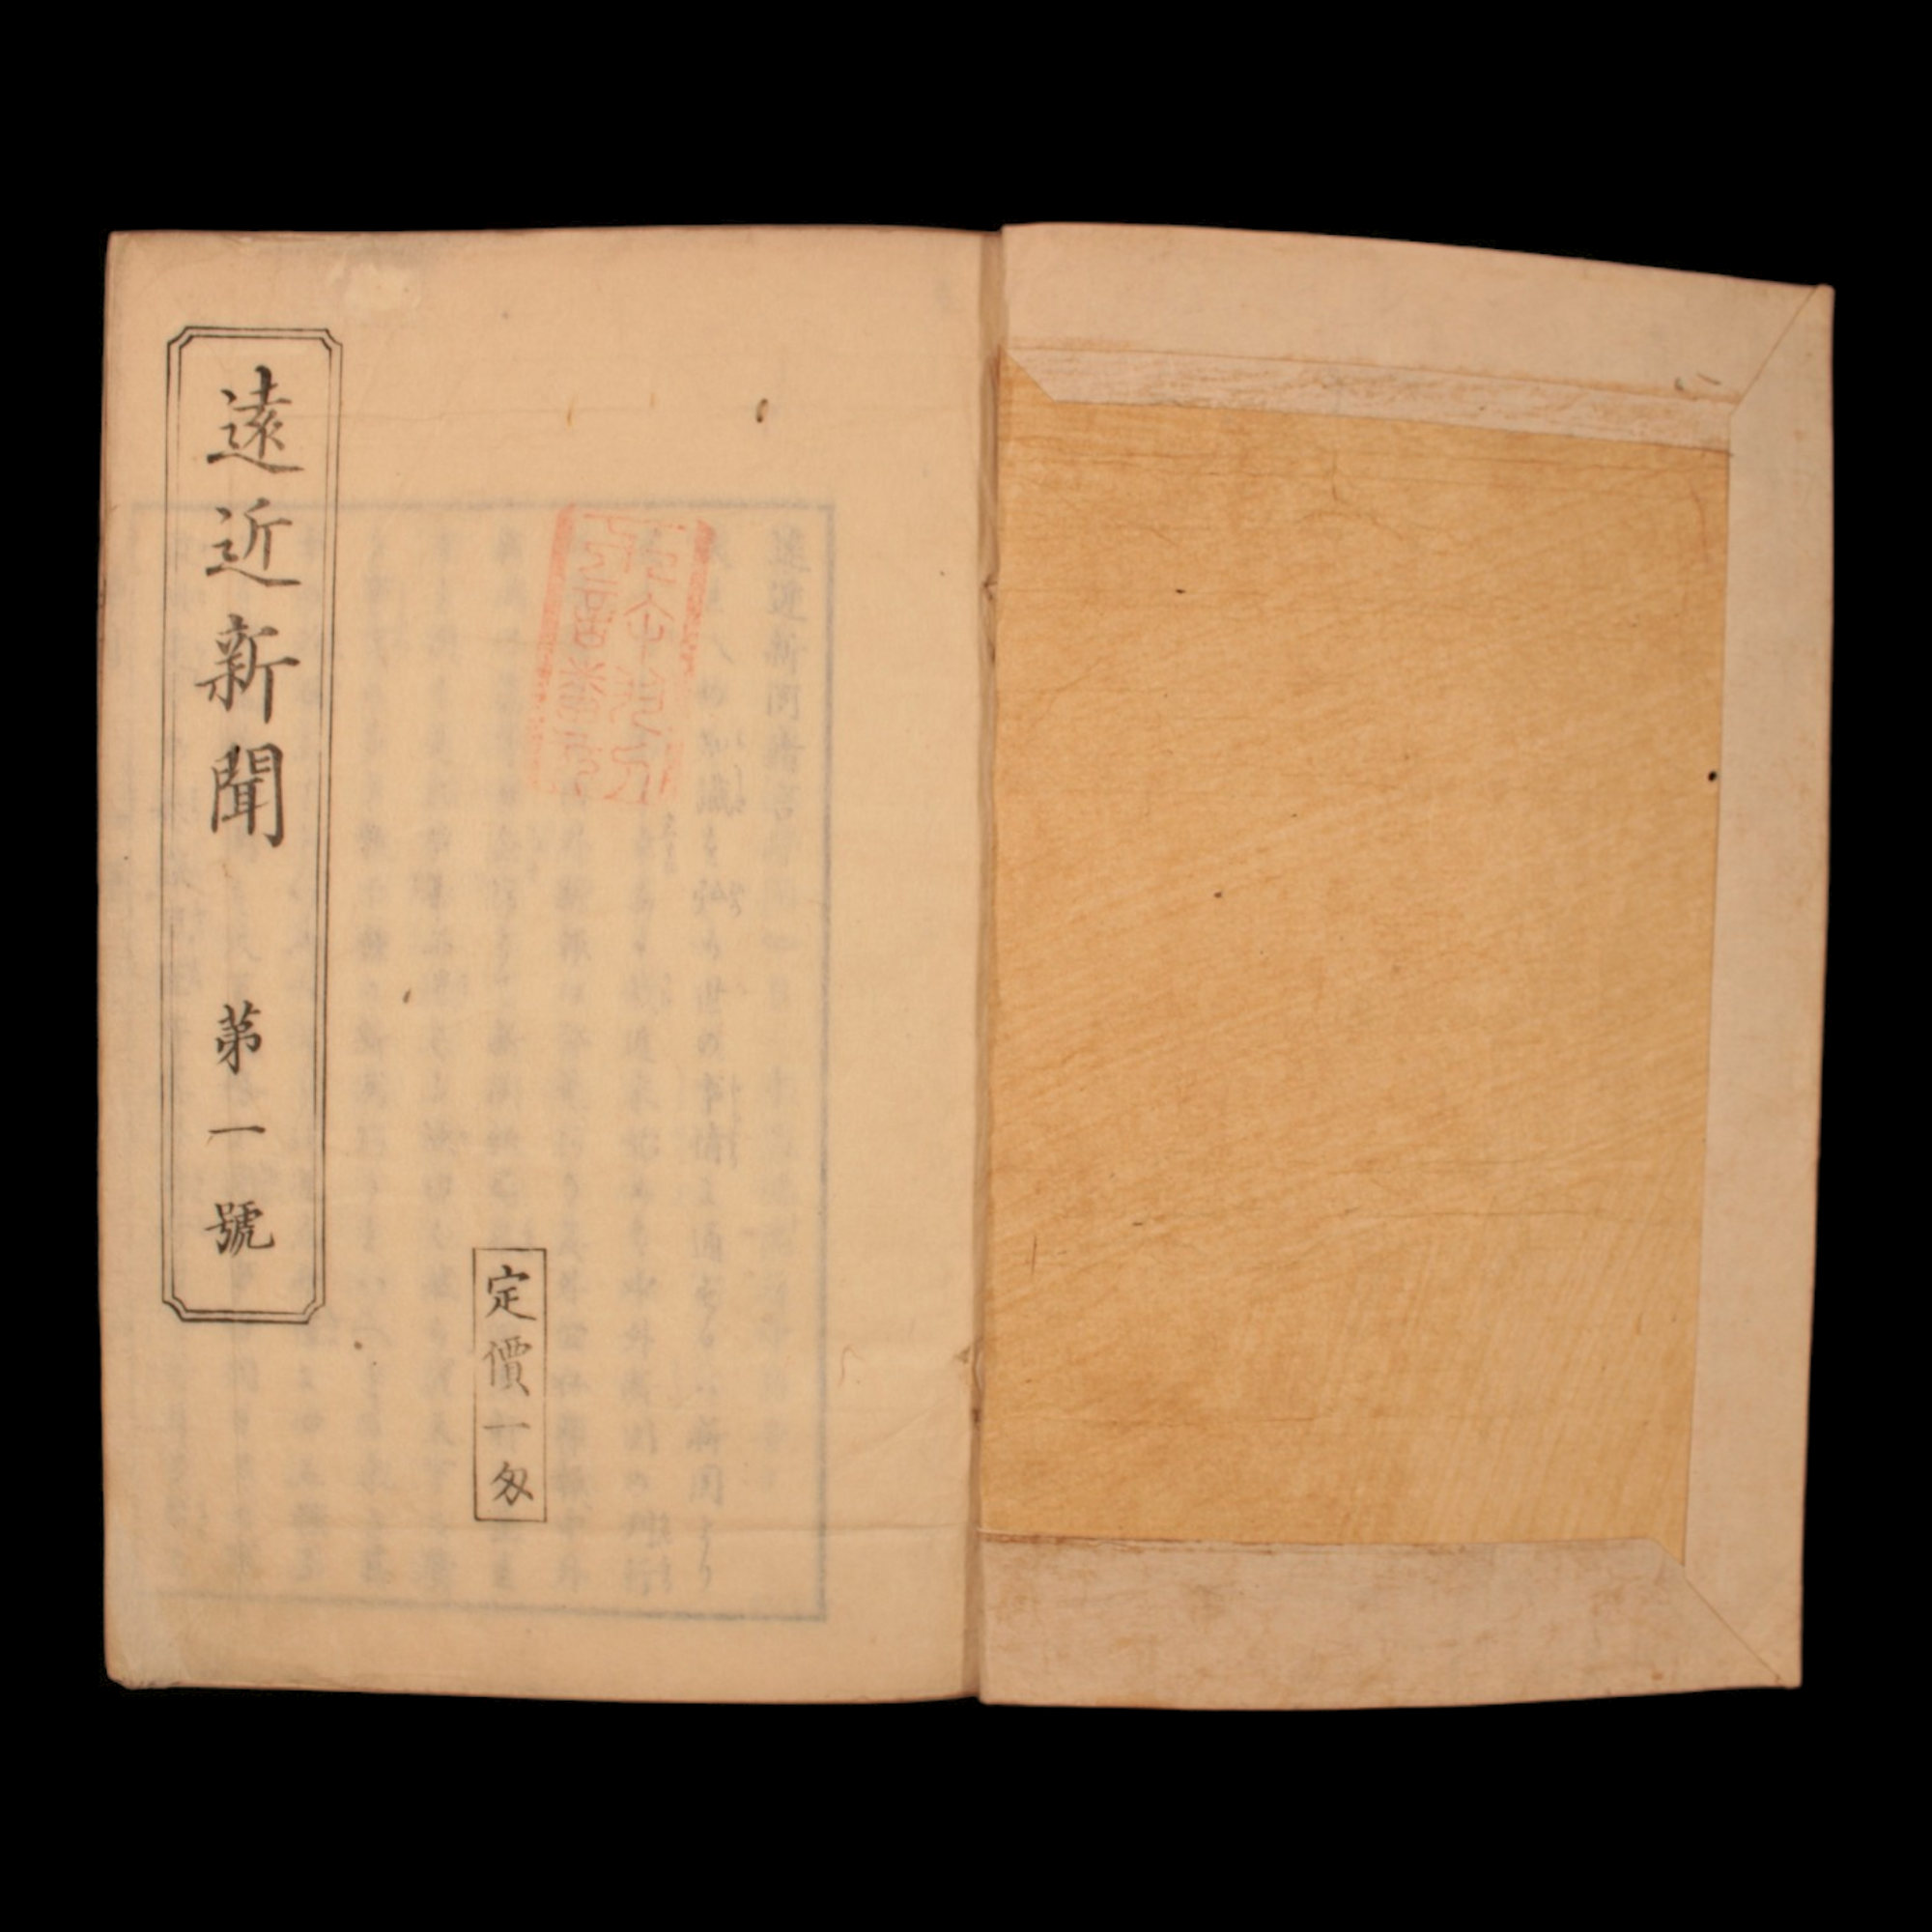 News From Near and Far, Vol 1 - Keio 4 (1868) - Keio Era Japan